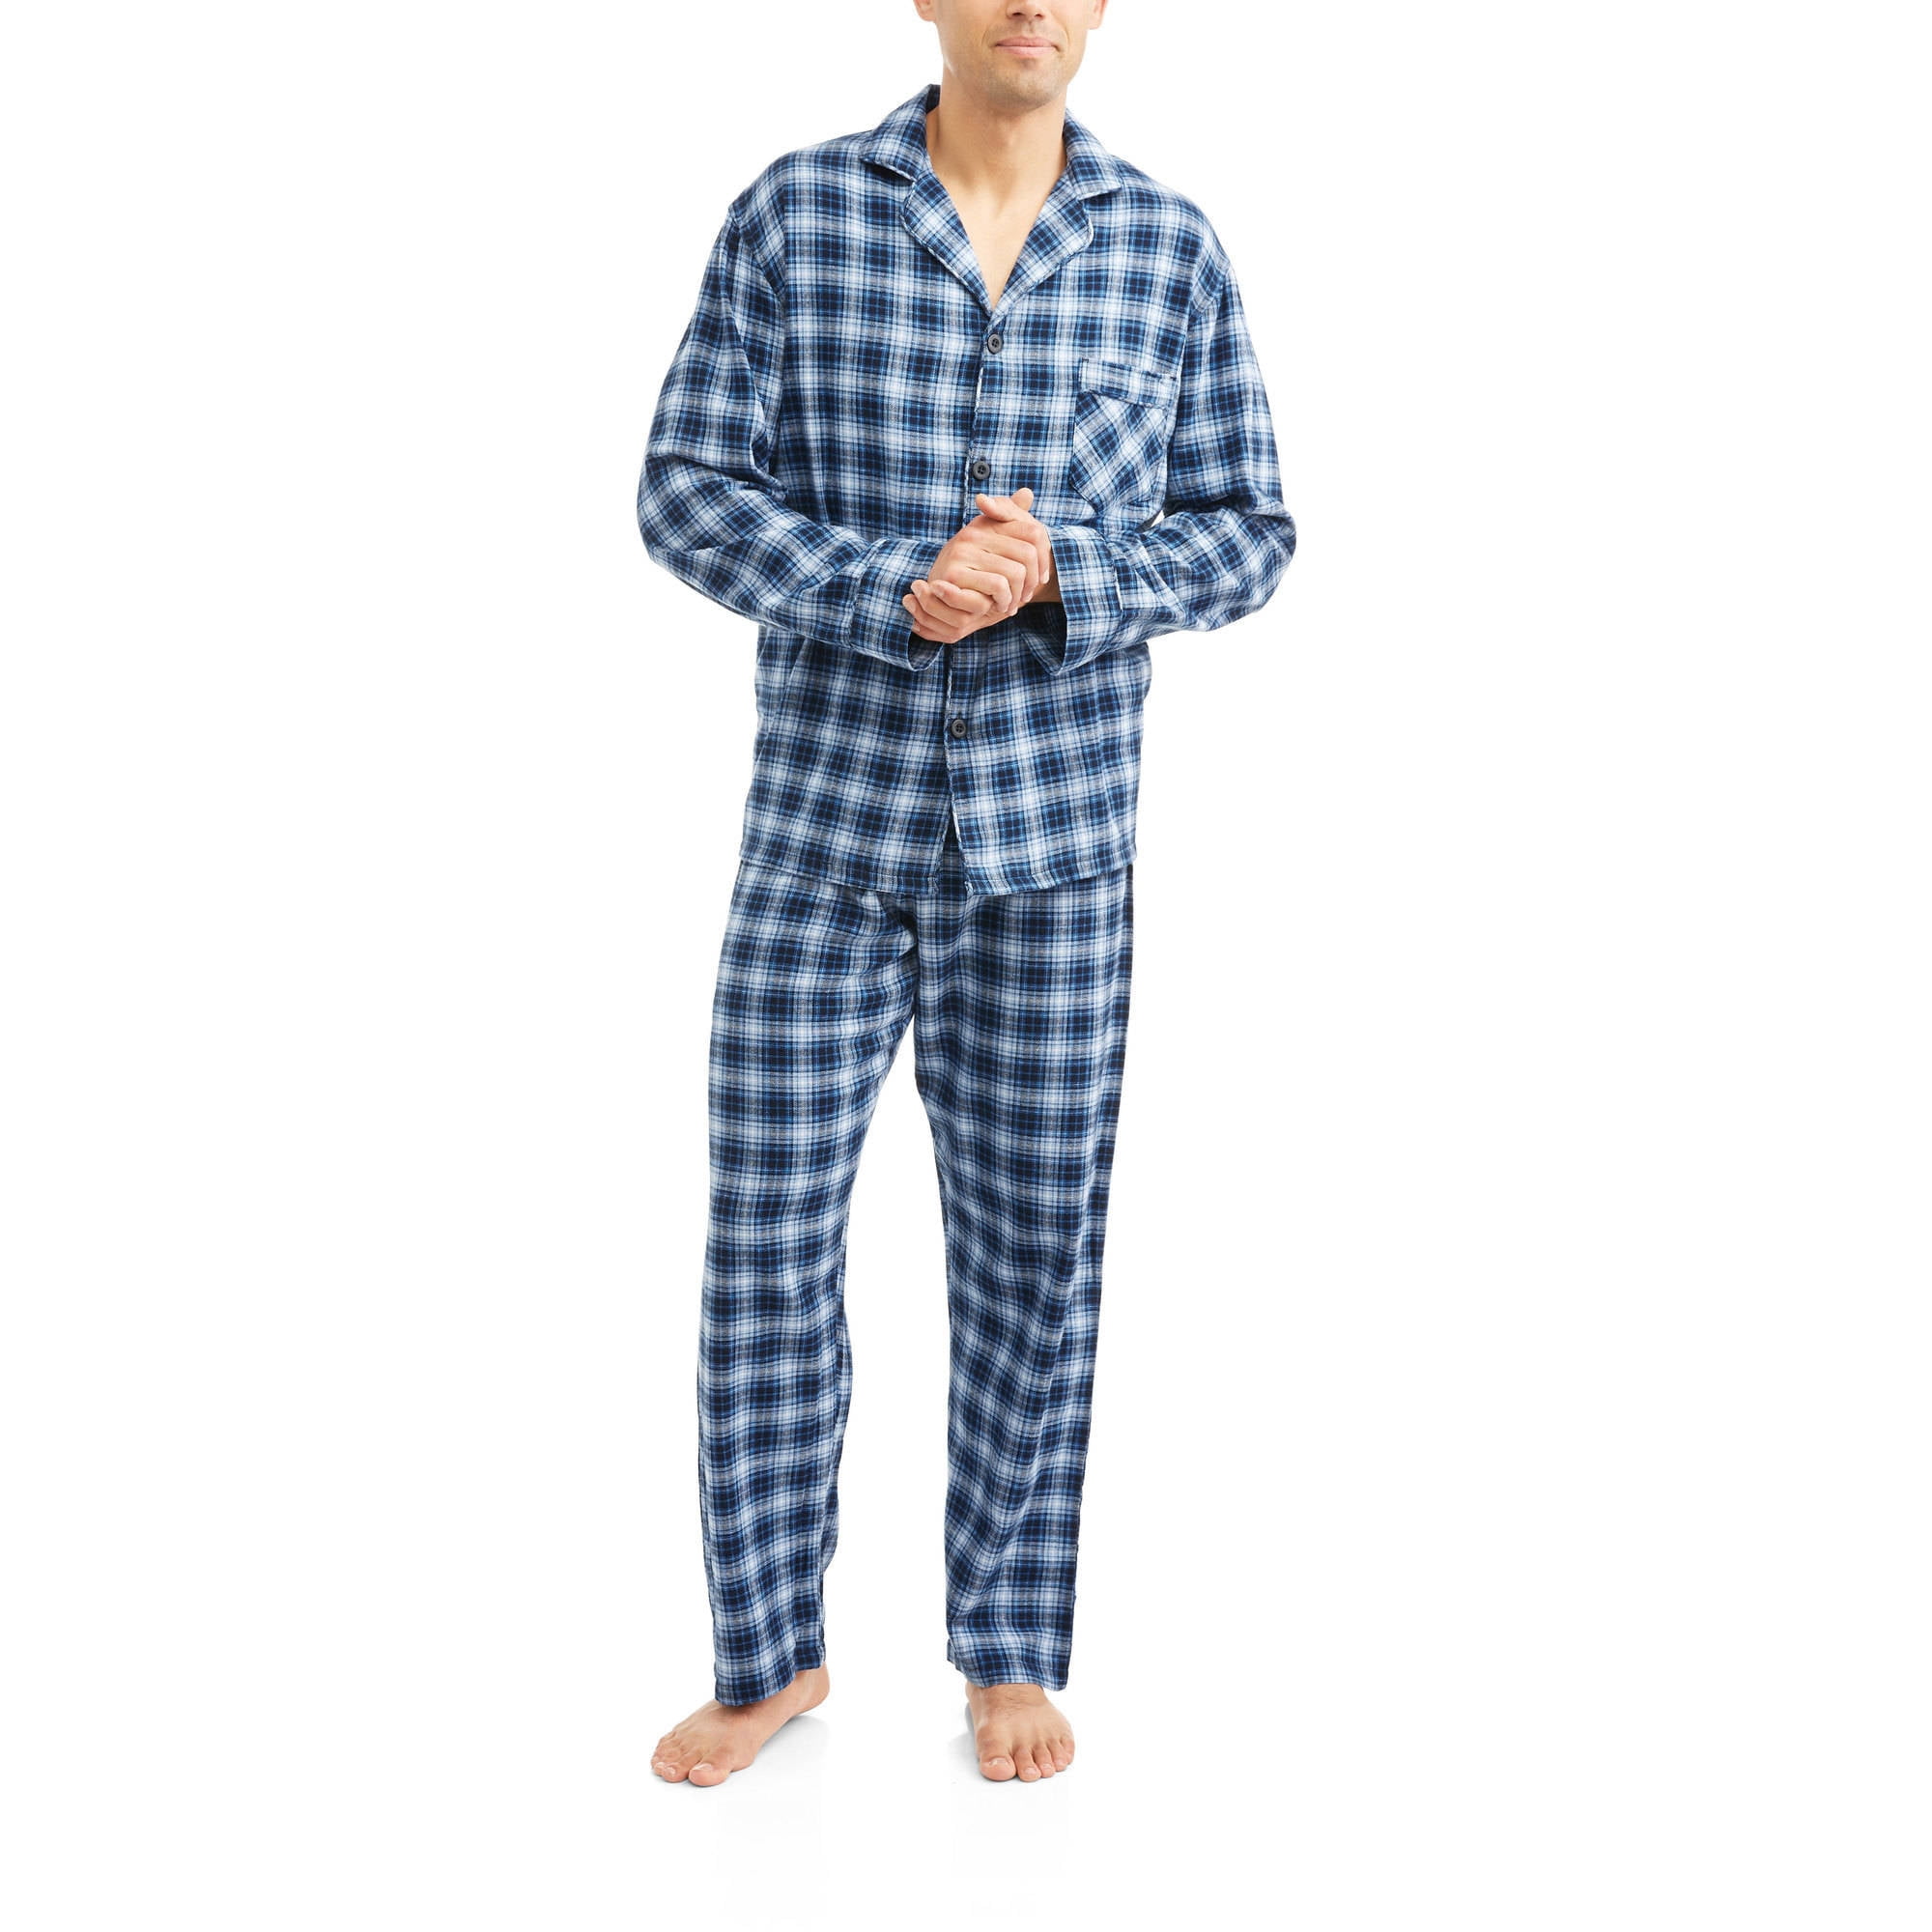 Hanes Mens 2 PC Cotton Poly Sleep Pajama Set S M L XL 2X varied color stripe 